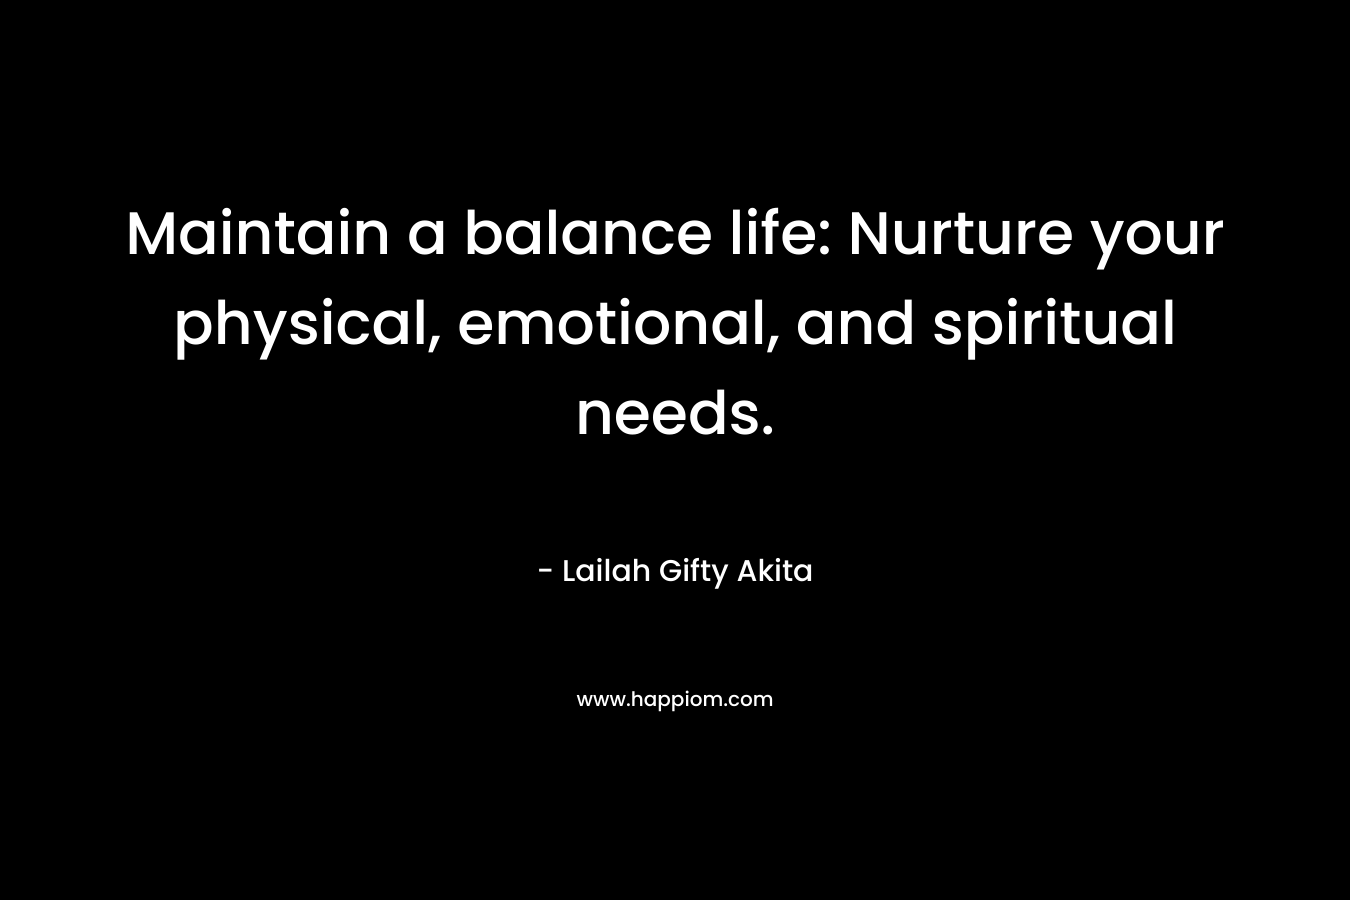 Maintain a balance life: Nurture your physical, emotional, and spiritual needs.